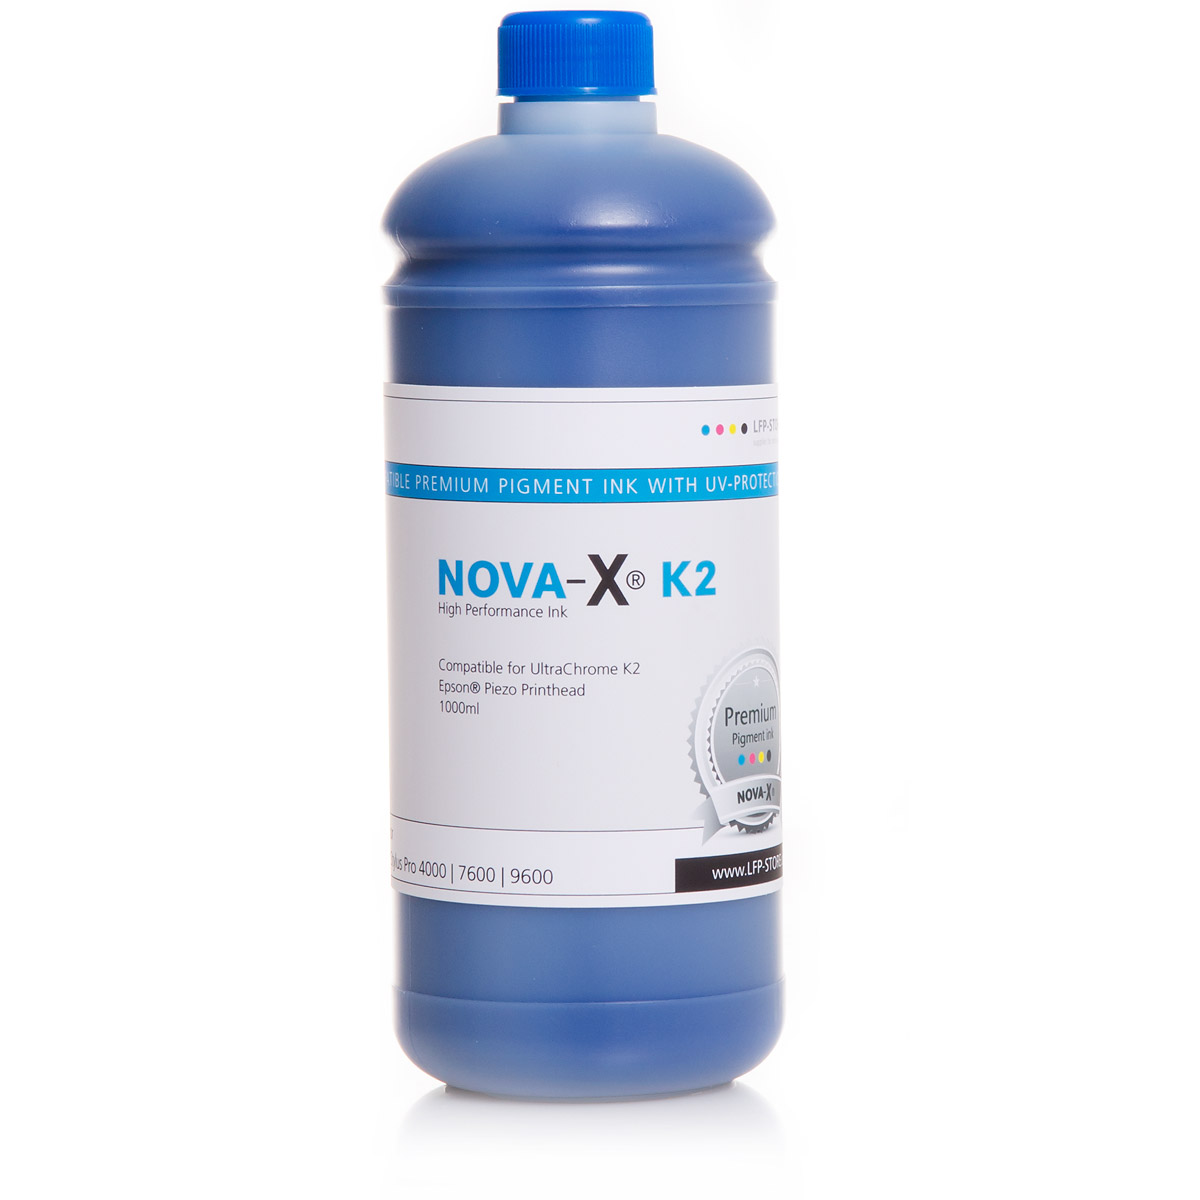 1L NOVA-X® K2 Pigmenttinte kompatibel für Epson Stylus Pro 4000 7600 9600